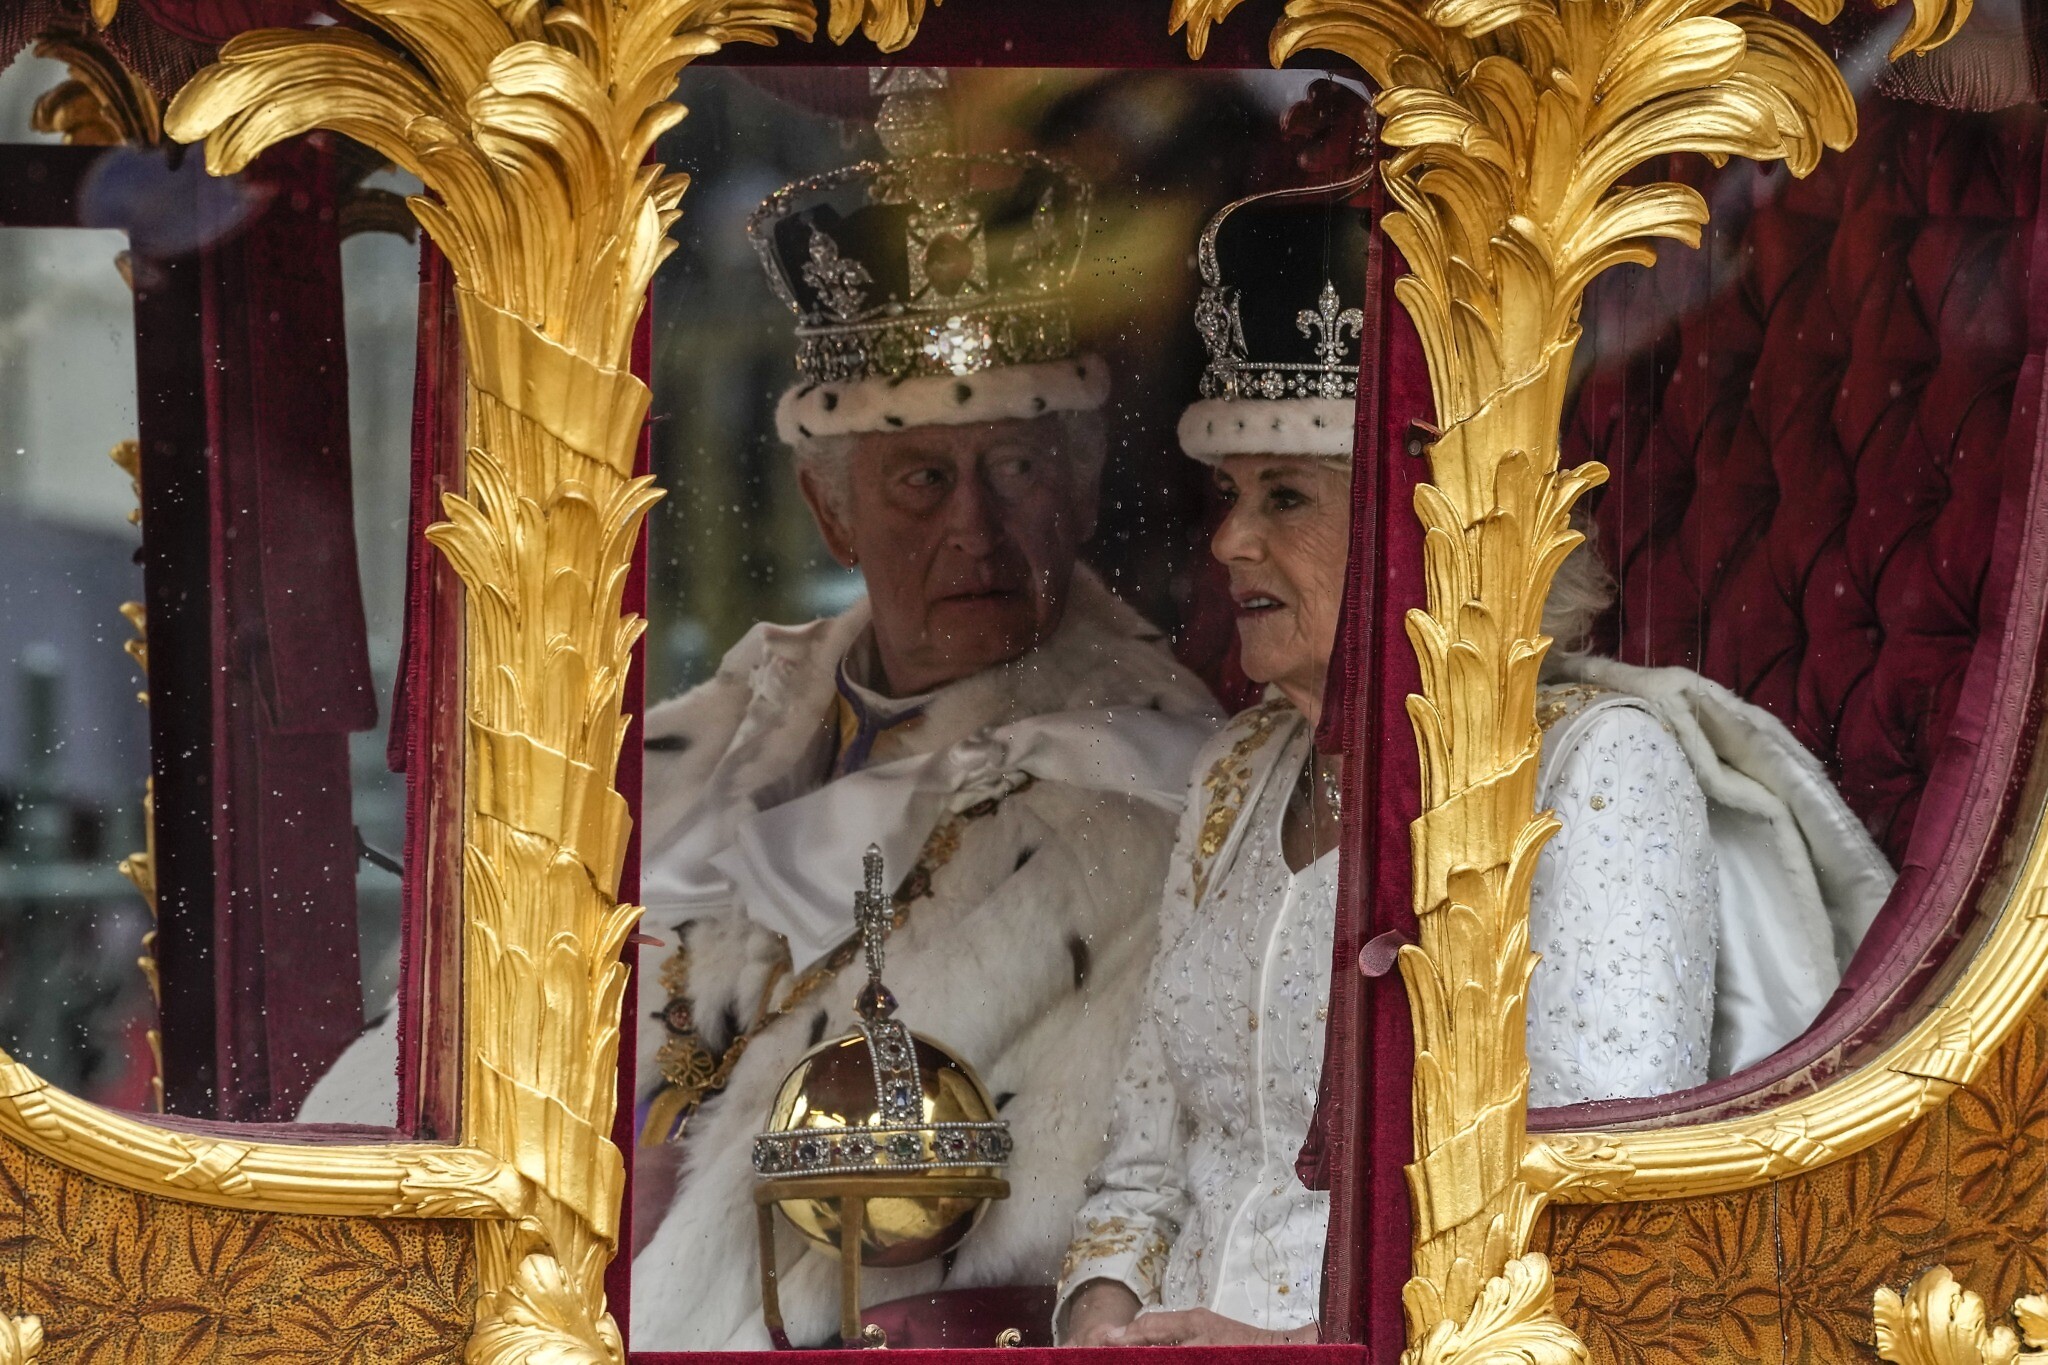 Queen Elizabeth II's coronation vs King Charles III's